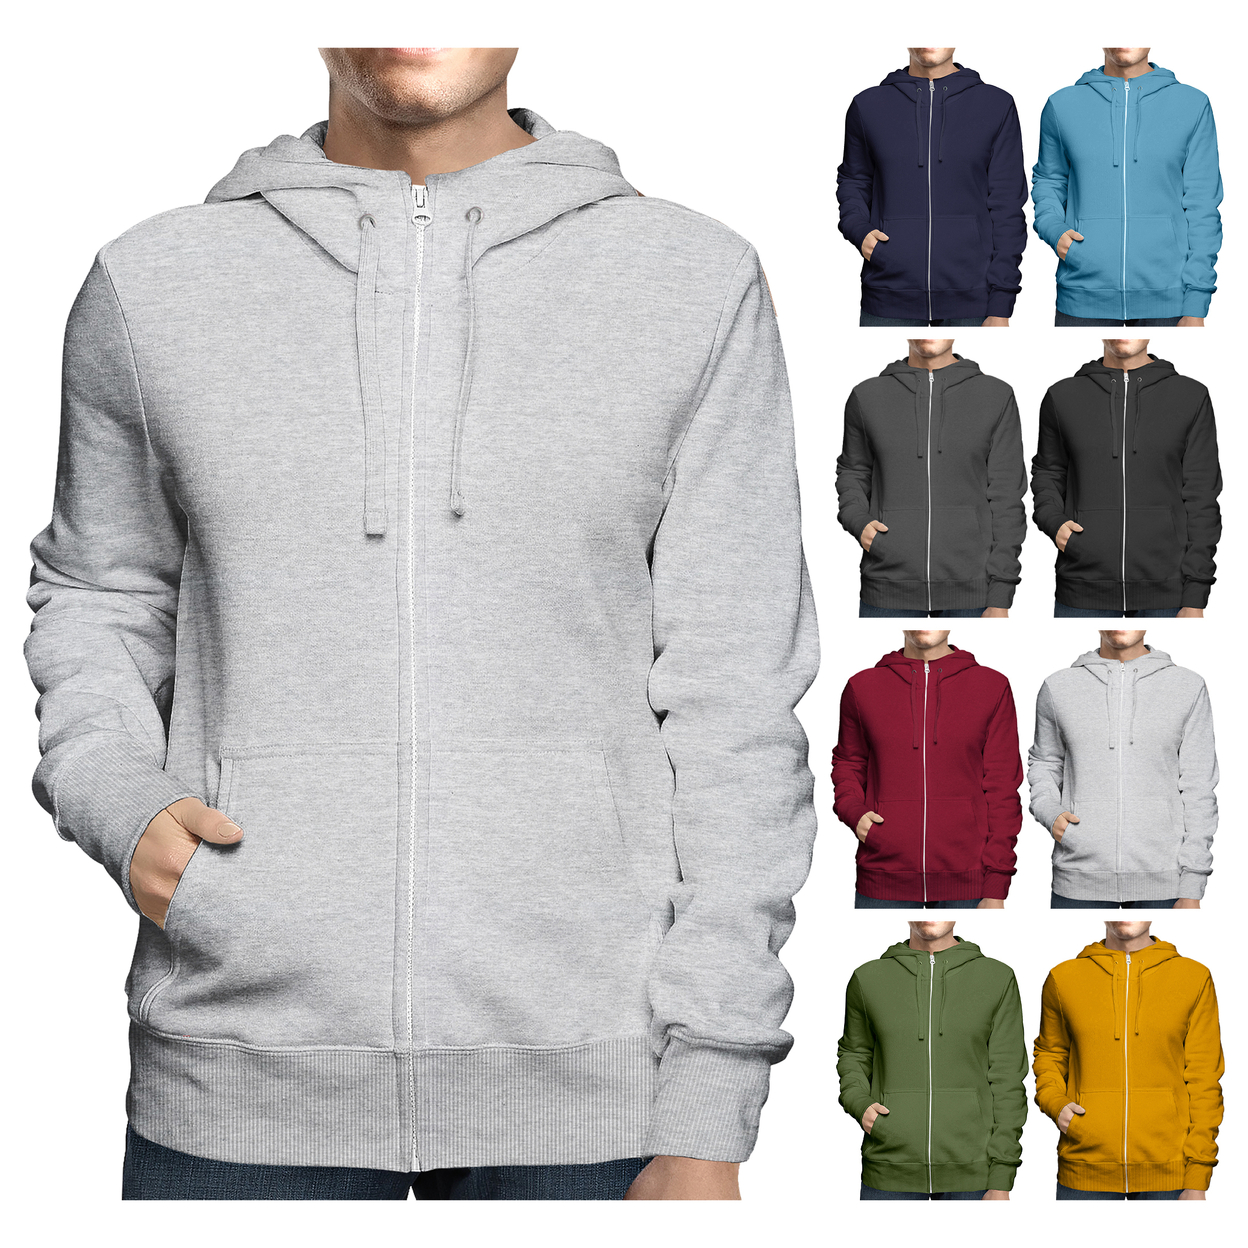 2-Pack: Men's Winter Warm Soft Full Zip-Up Fleece Lined Hoodie Sweatshirt - Black & Black, Medium